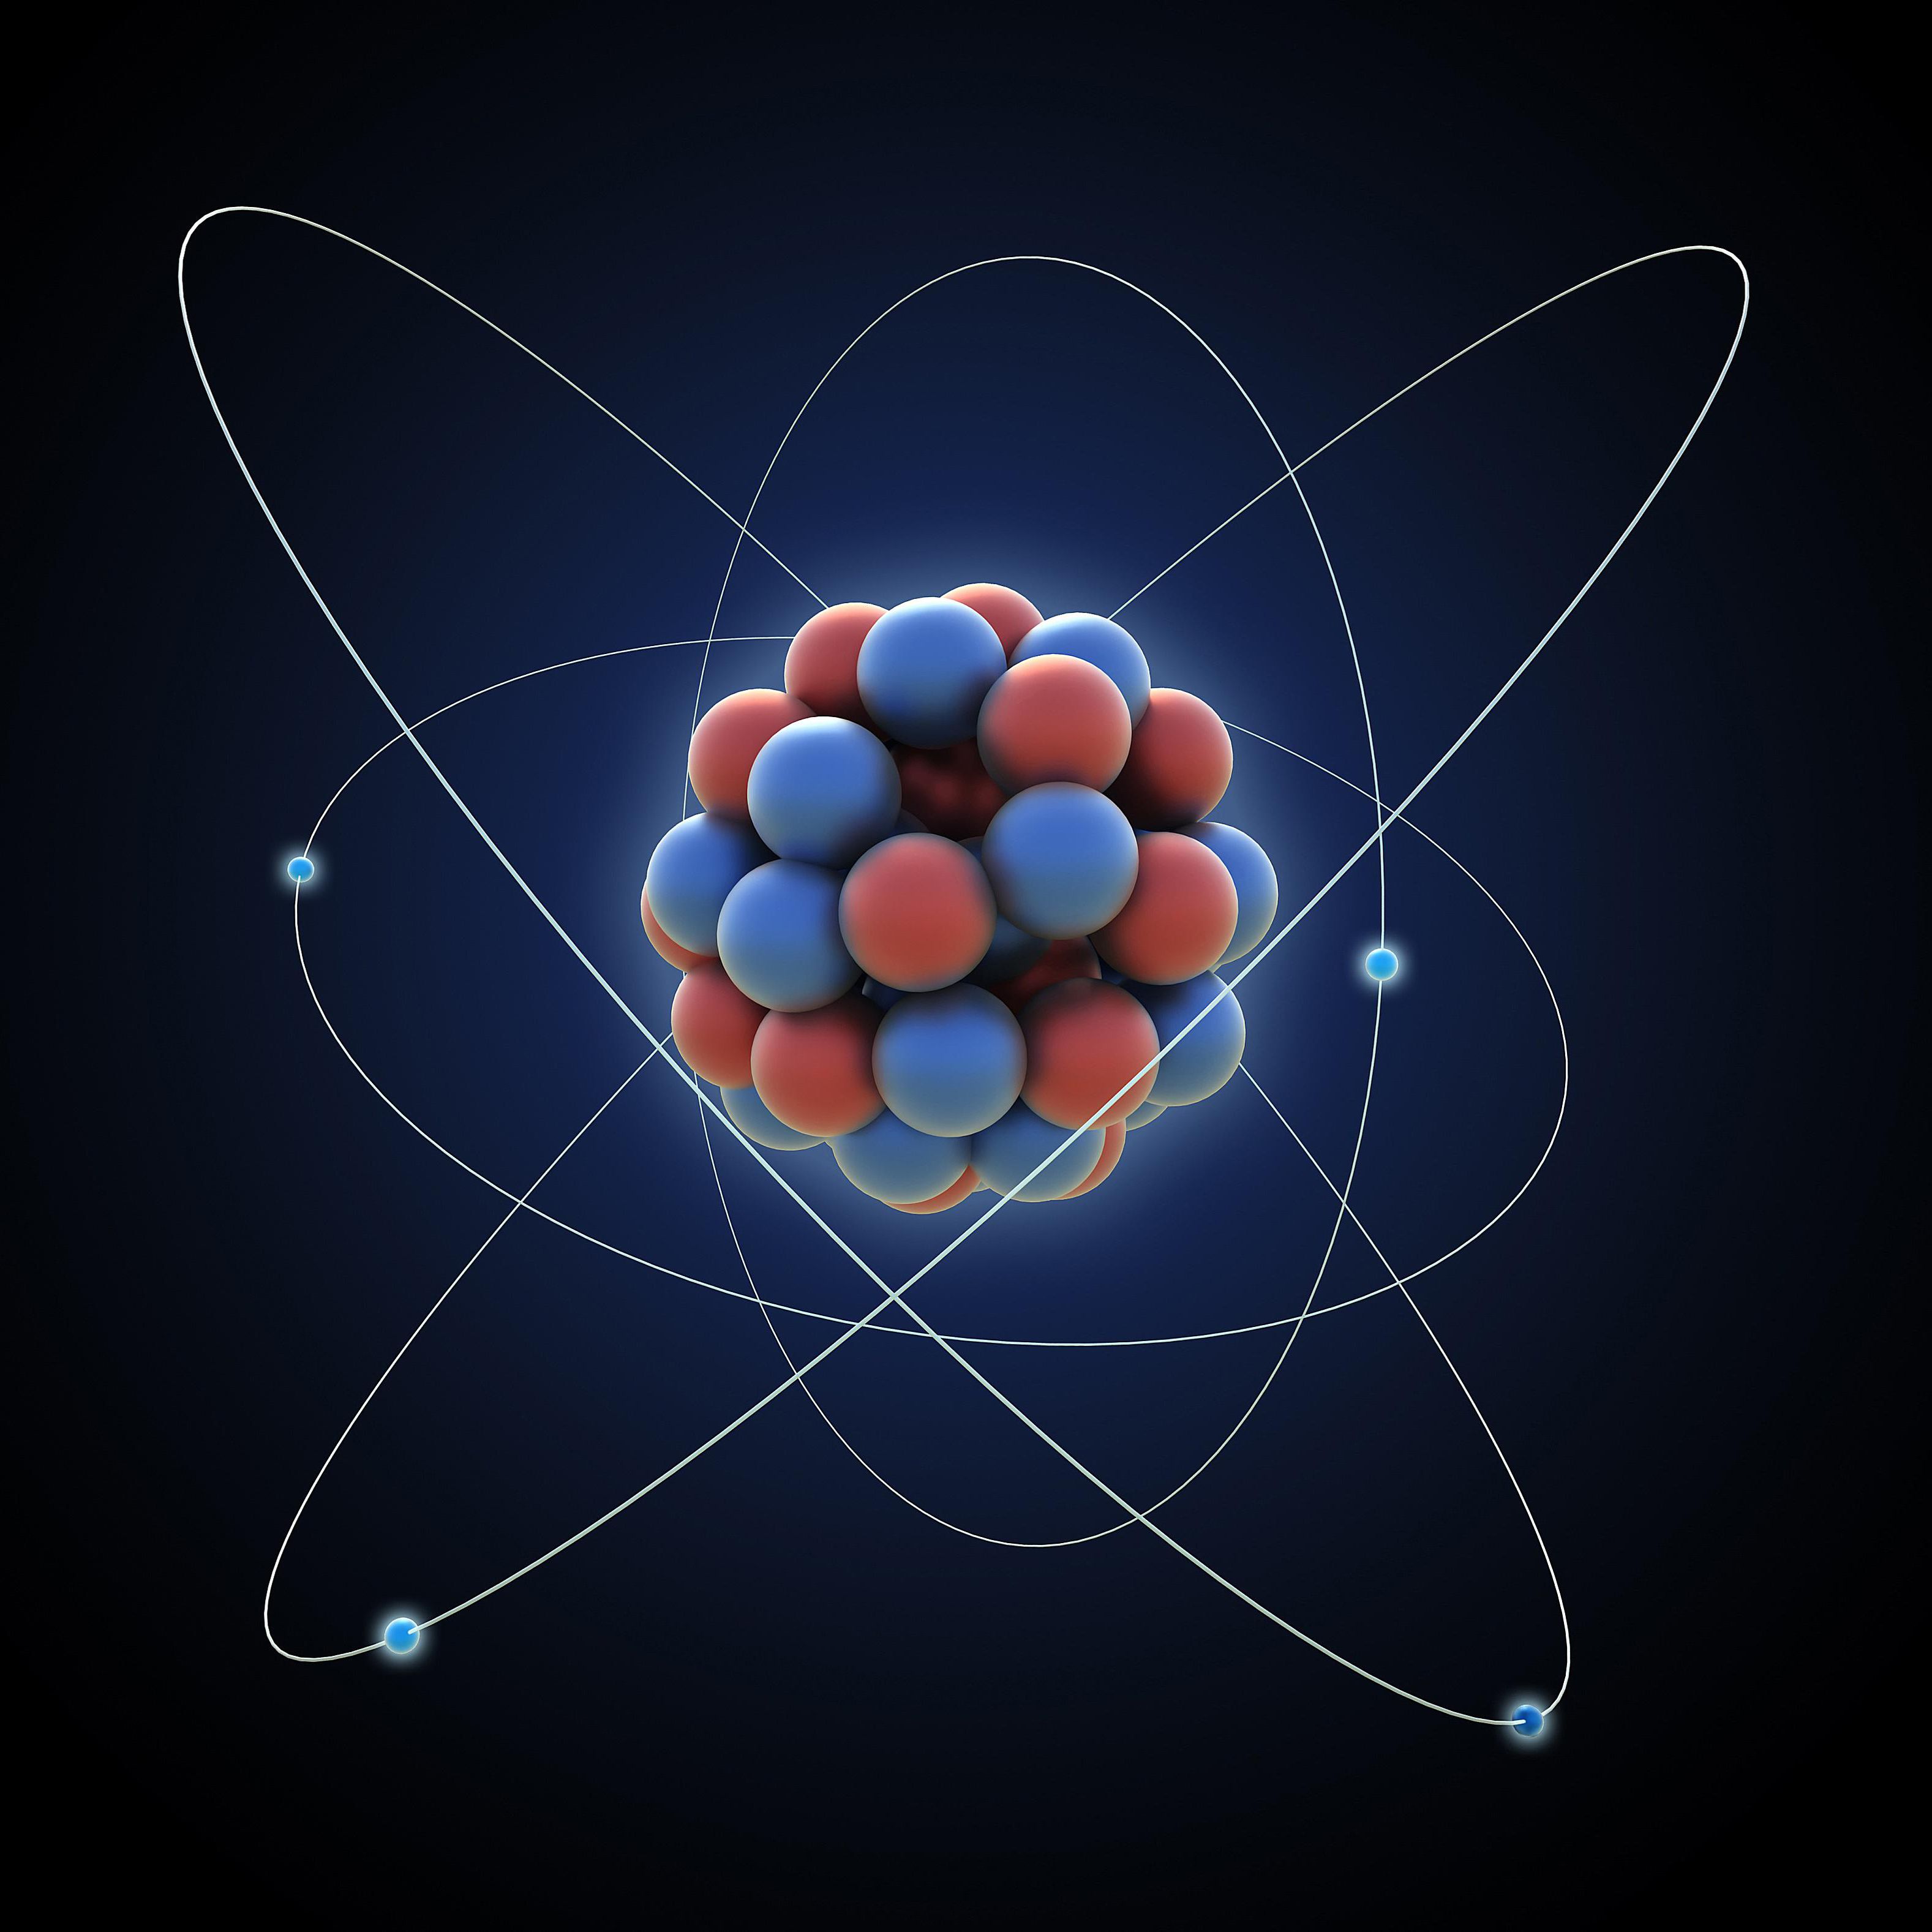 Atom example sentence